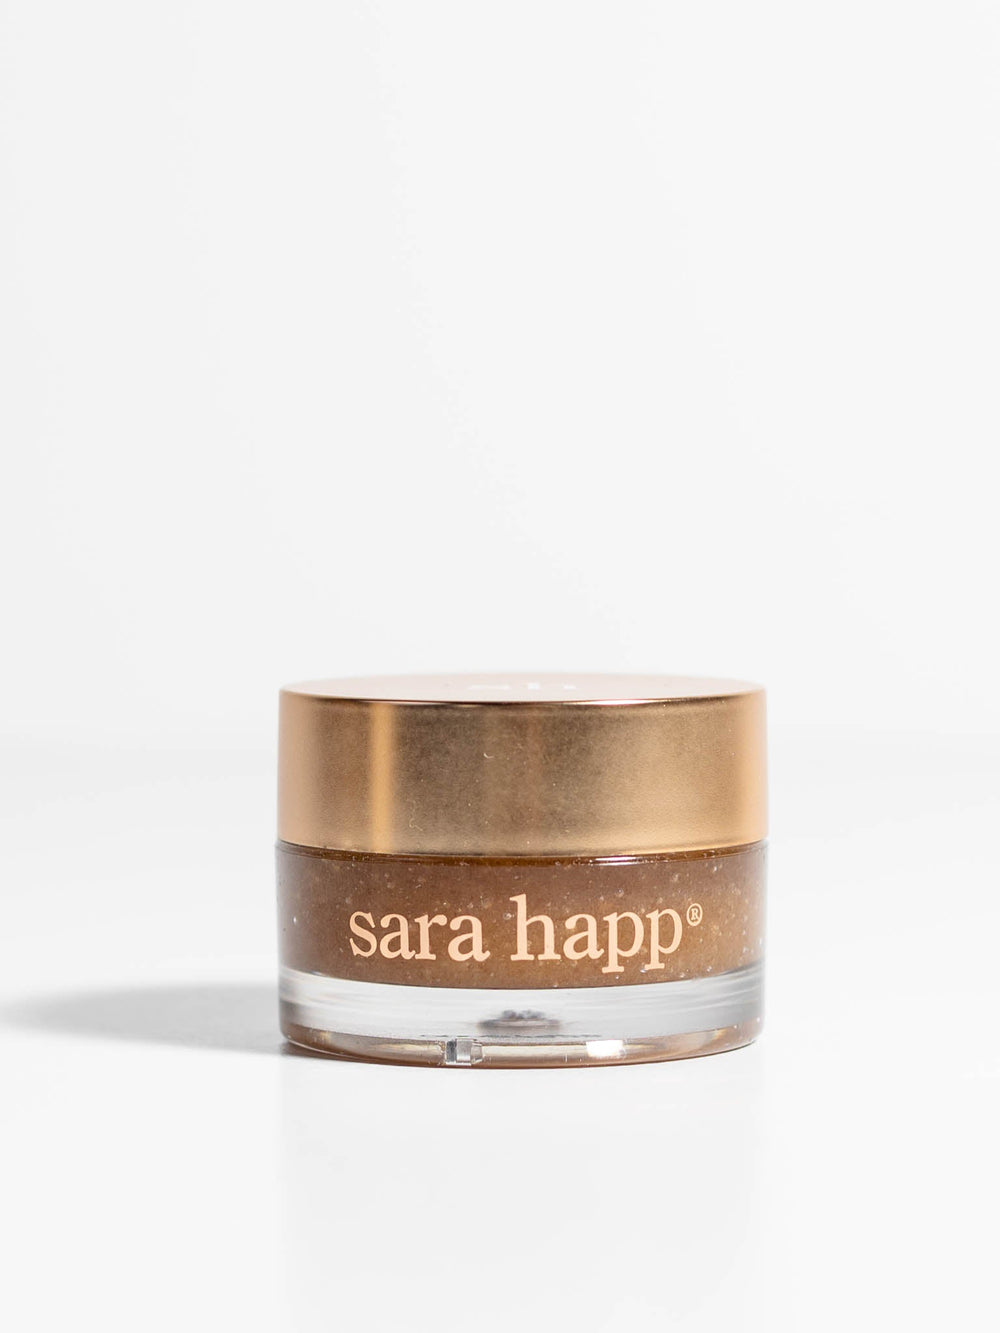 Sara Happ-.5oz Lip Scrub - Vanilla Bean - Leela and Lavender